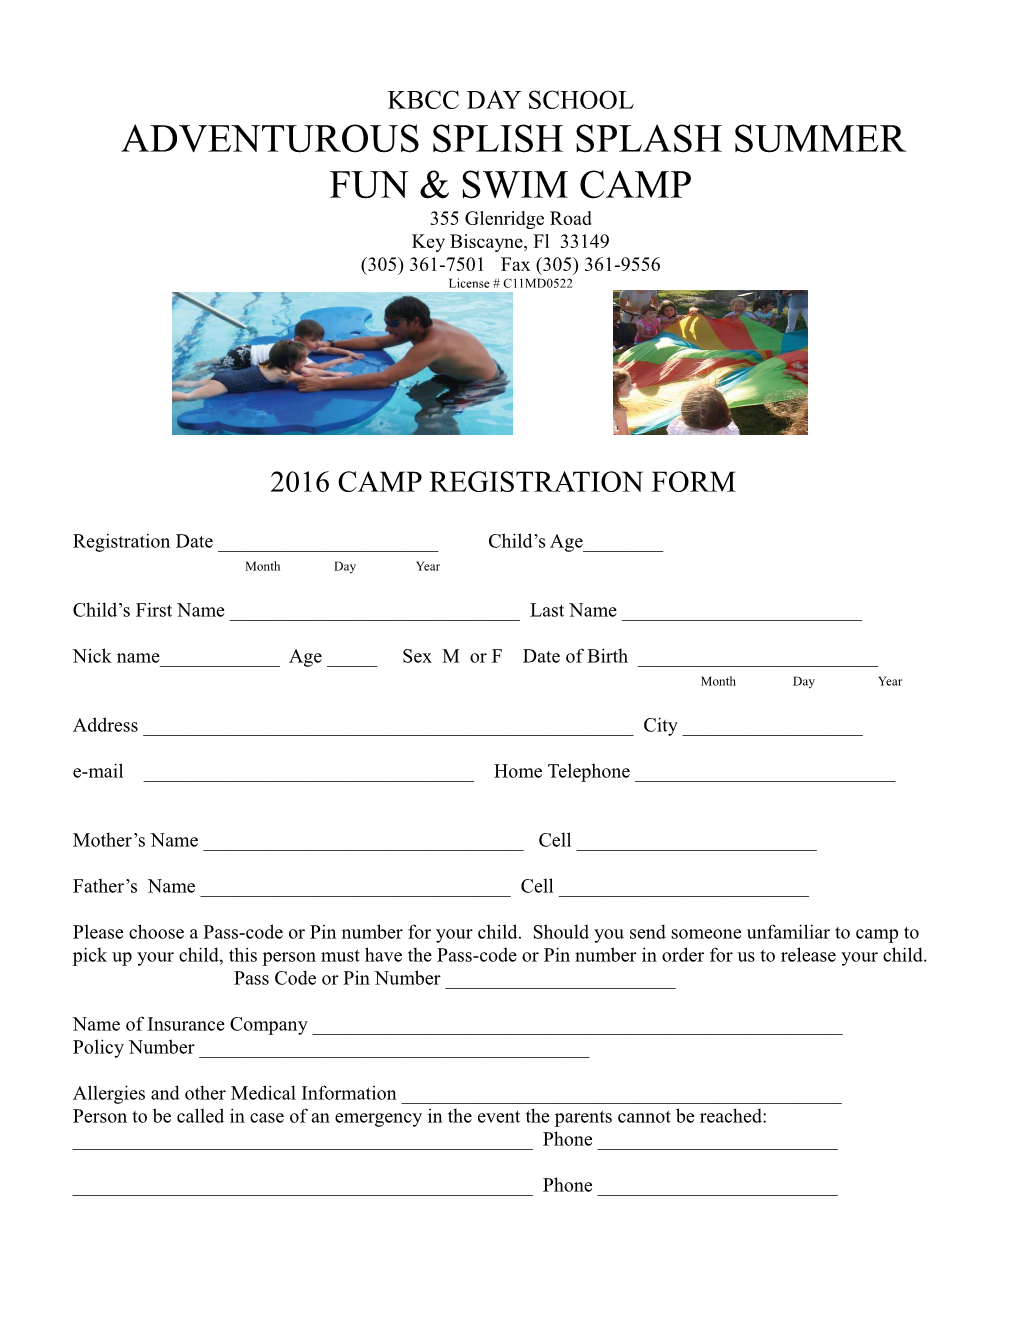 Adventurous Splish Splash Summer Fun & Swim Camp